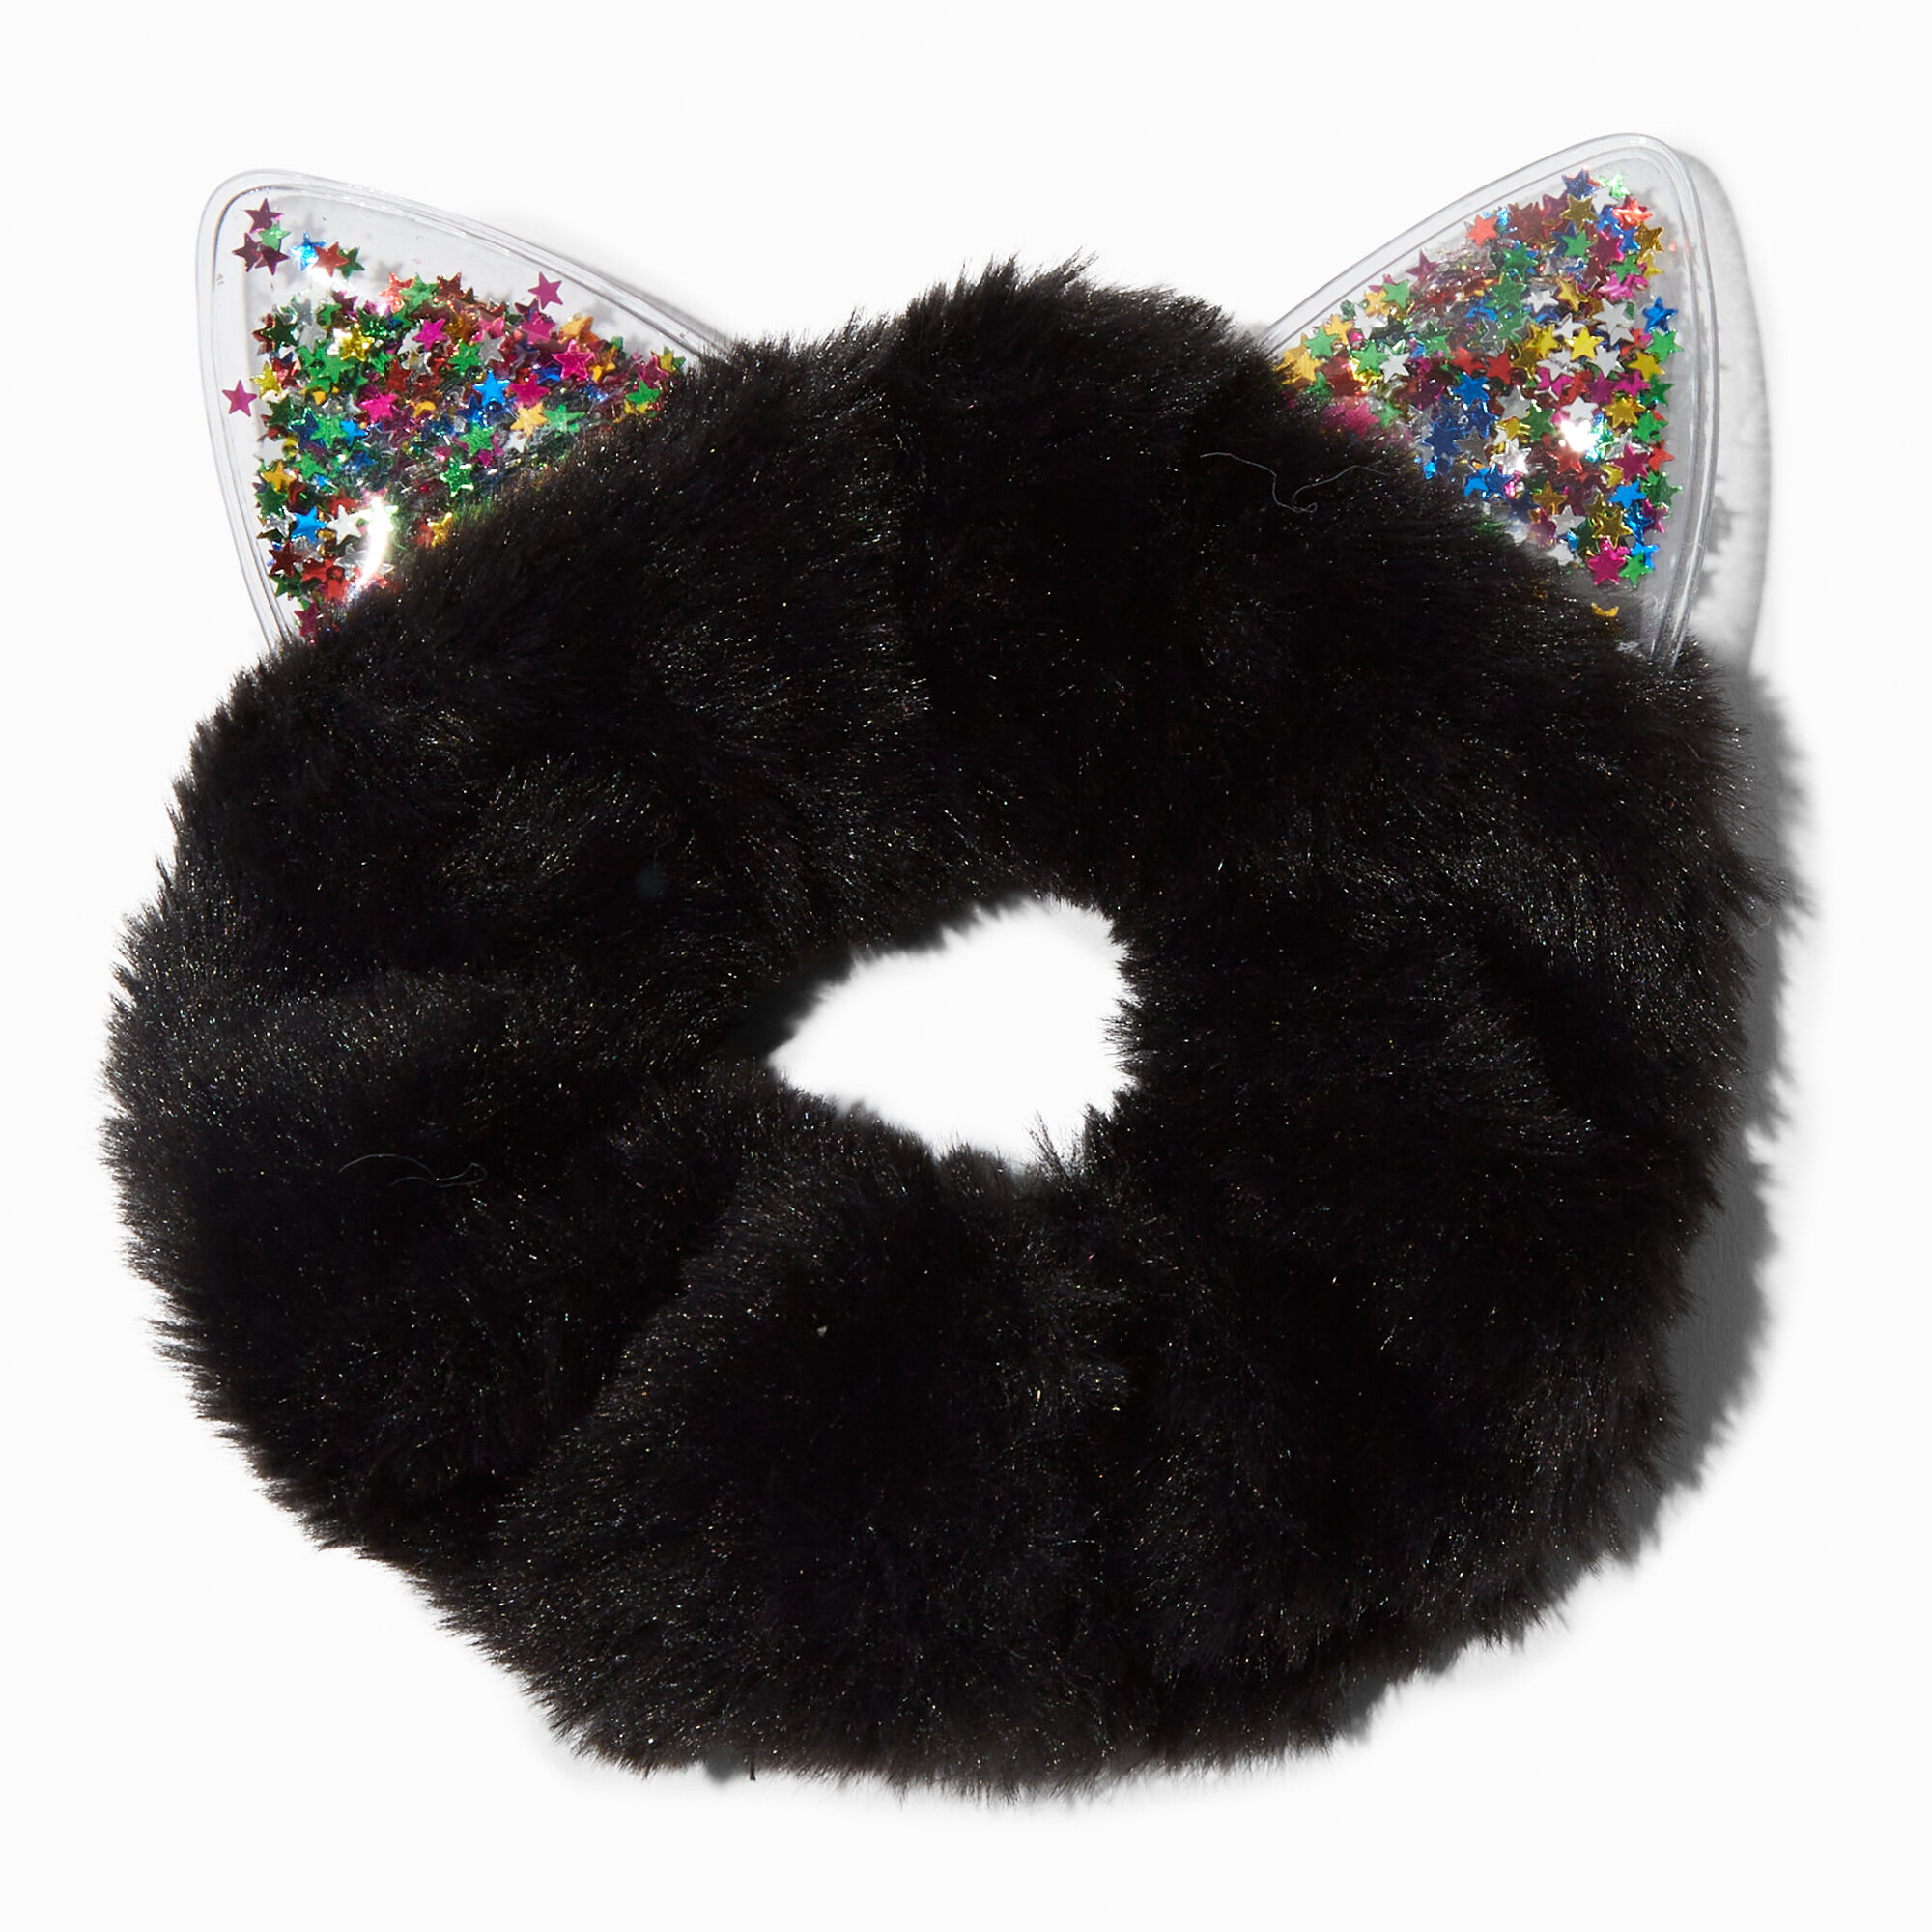 View Claires Furry Confetti Cat Ear Medium Hair Scrunchie Black information